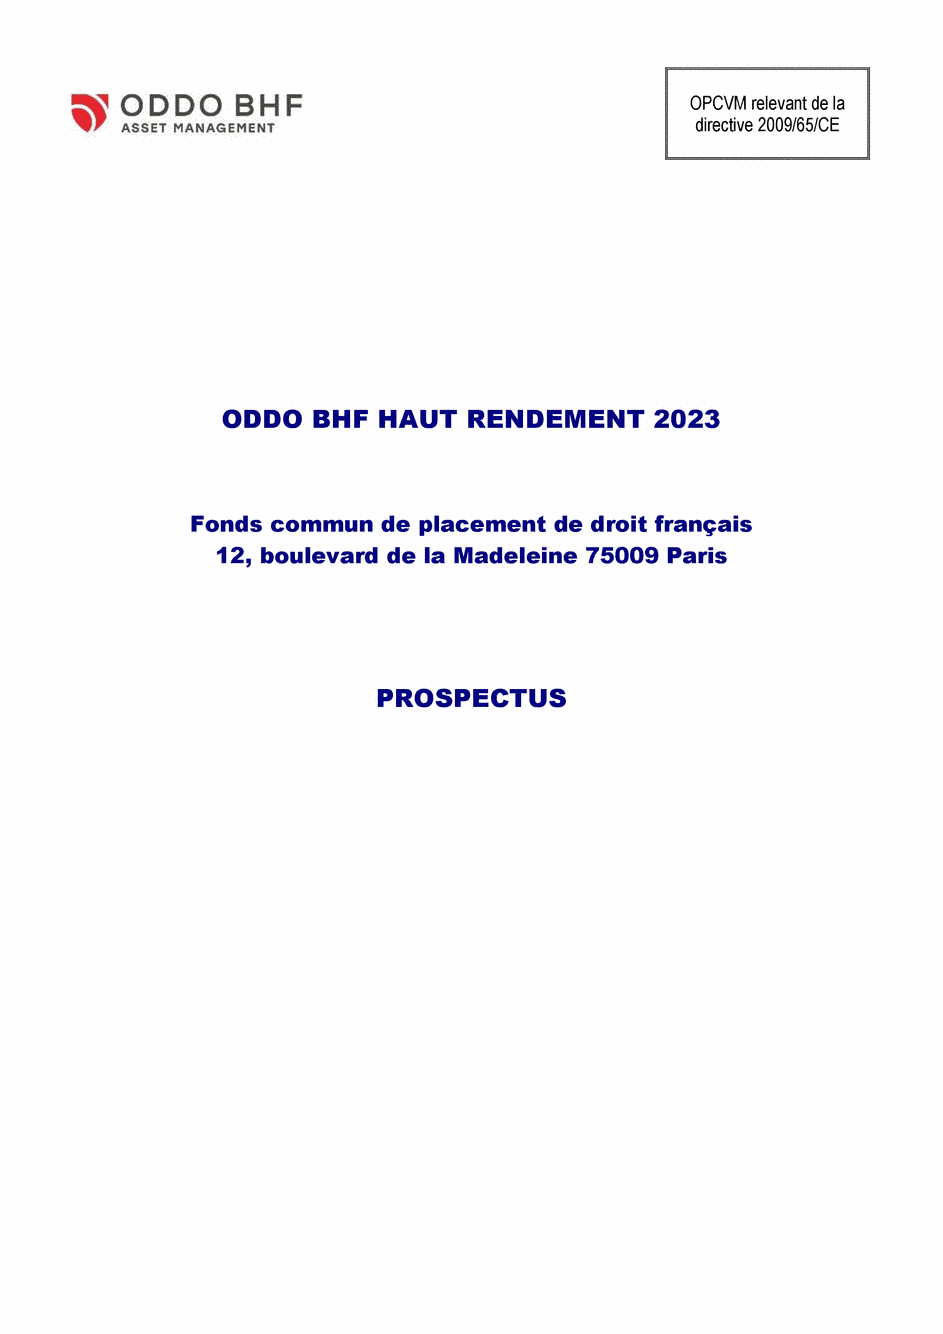 Prospectus ODDO BHF HAUT RENDEMENT 2023 GC-EUR - 14/02/2020 - Français